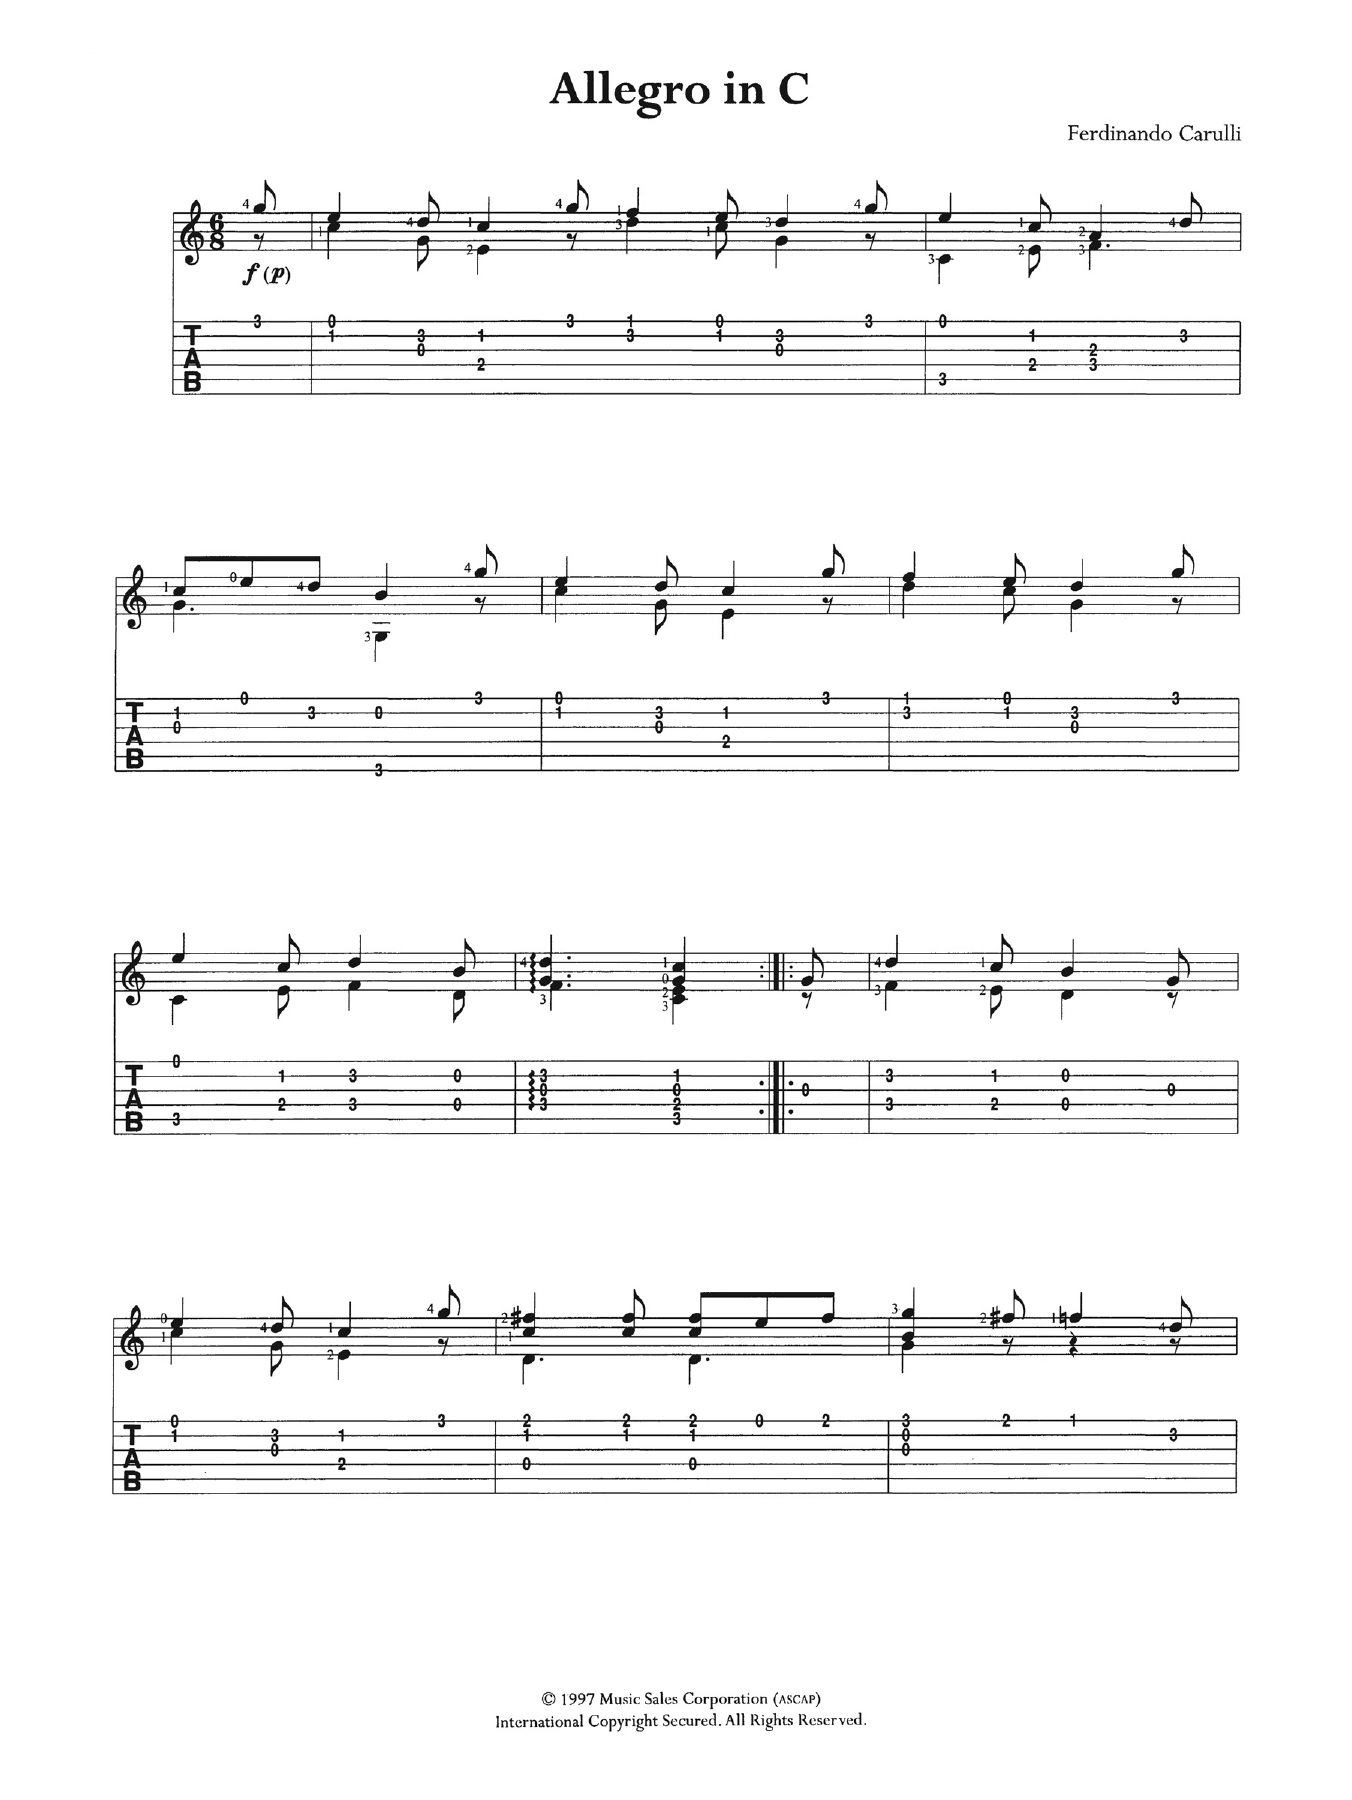 Ferdinando Carulli Allegro In C Sheet Music Notes & Chords for Guitar Tab - Download or Print PDF